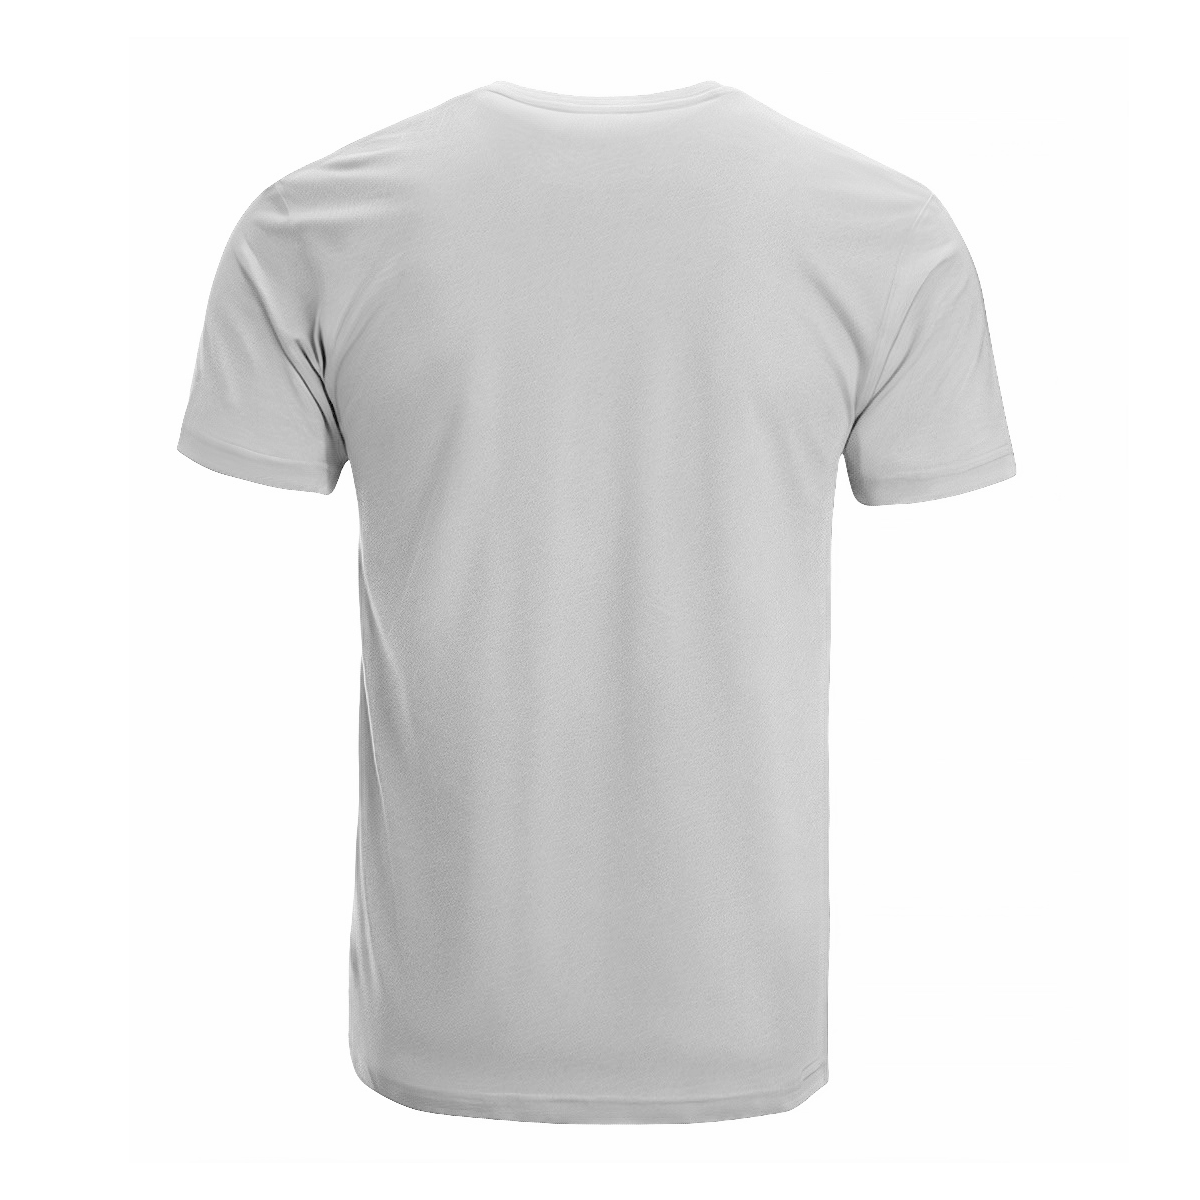 Lundin Tartan Crest T-shirt - I'm not yelling style